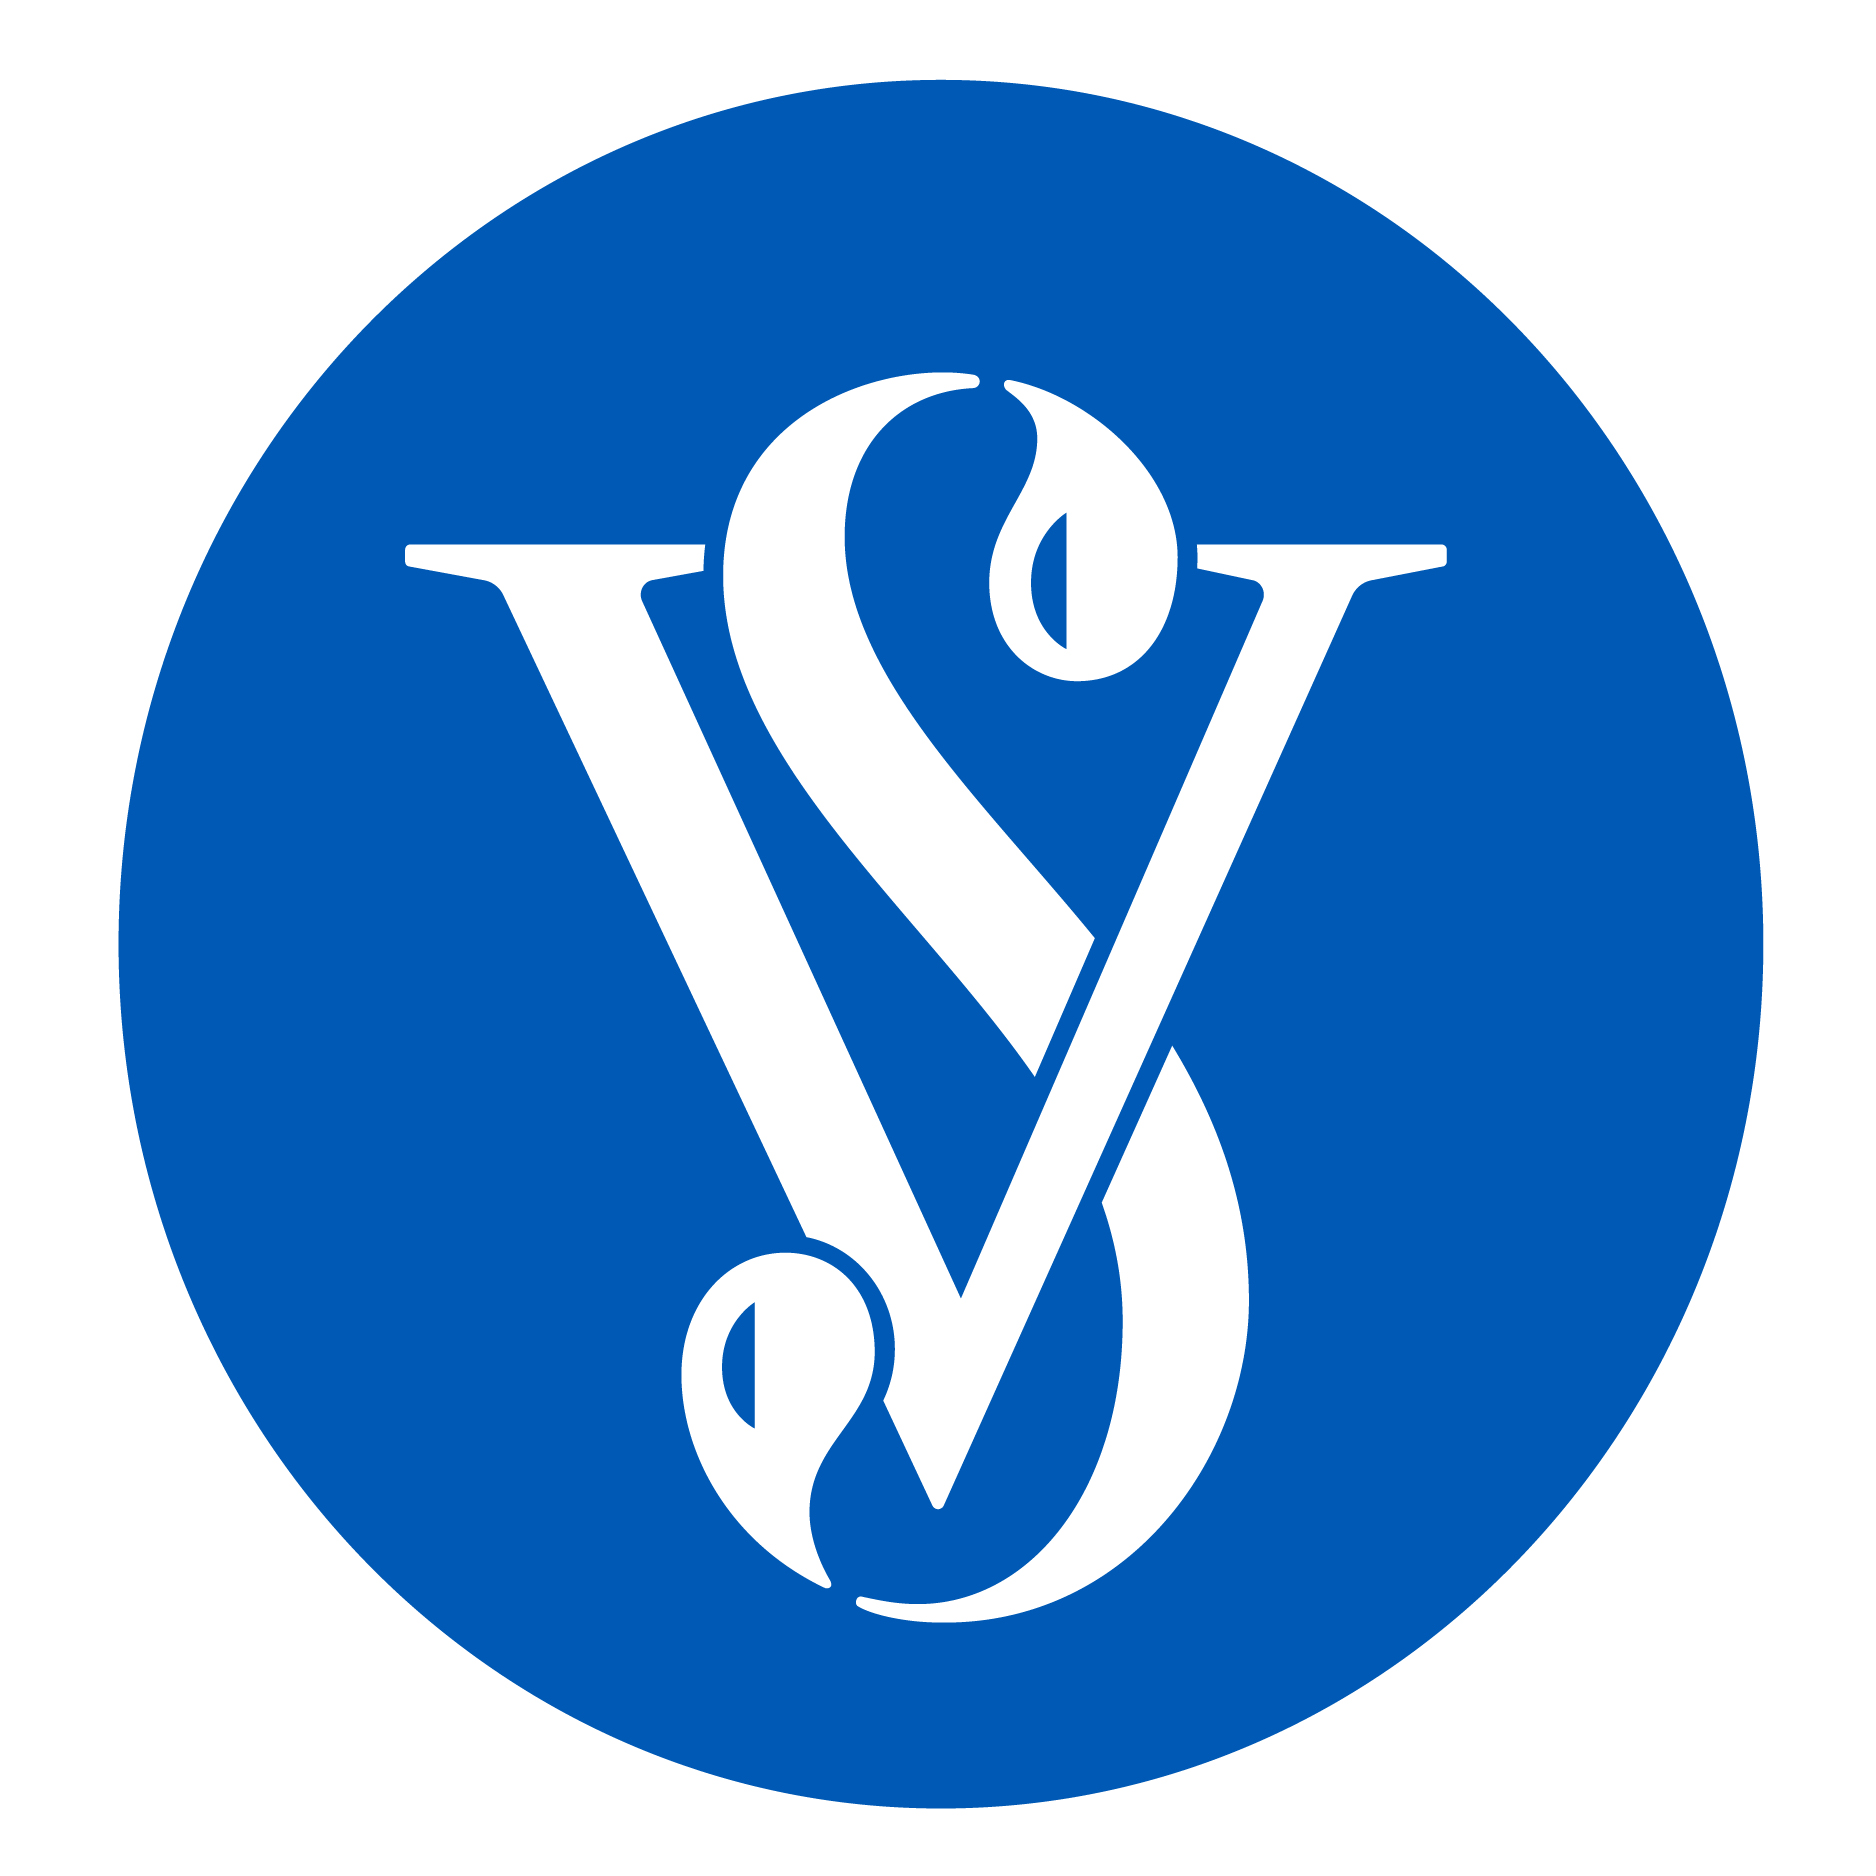 Scottys Vodka logo design by logo designer Seth Design Group for your inspiration and for the worlds largest logo competition